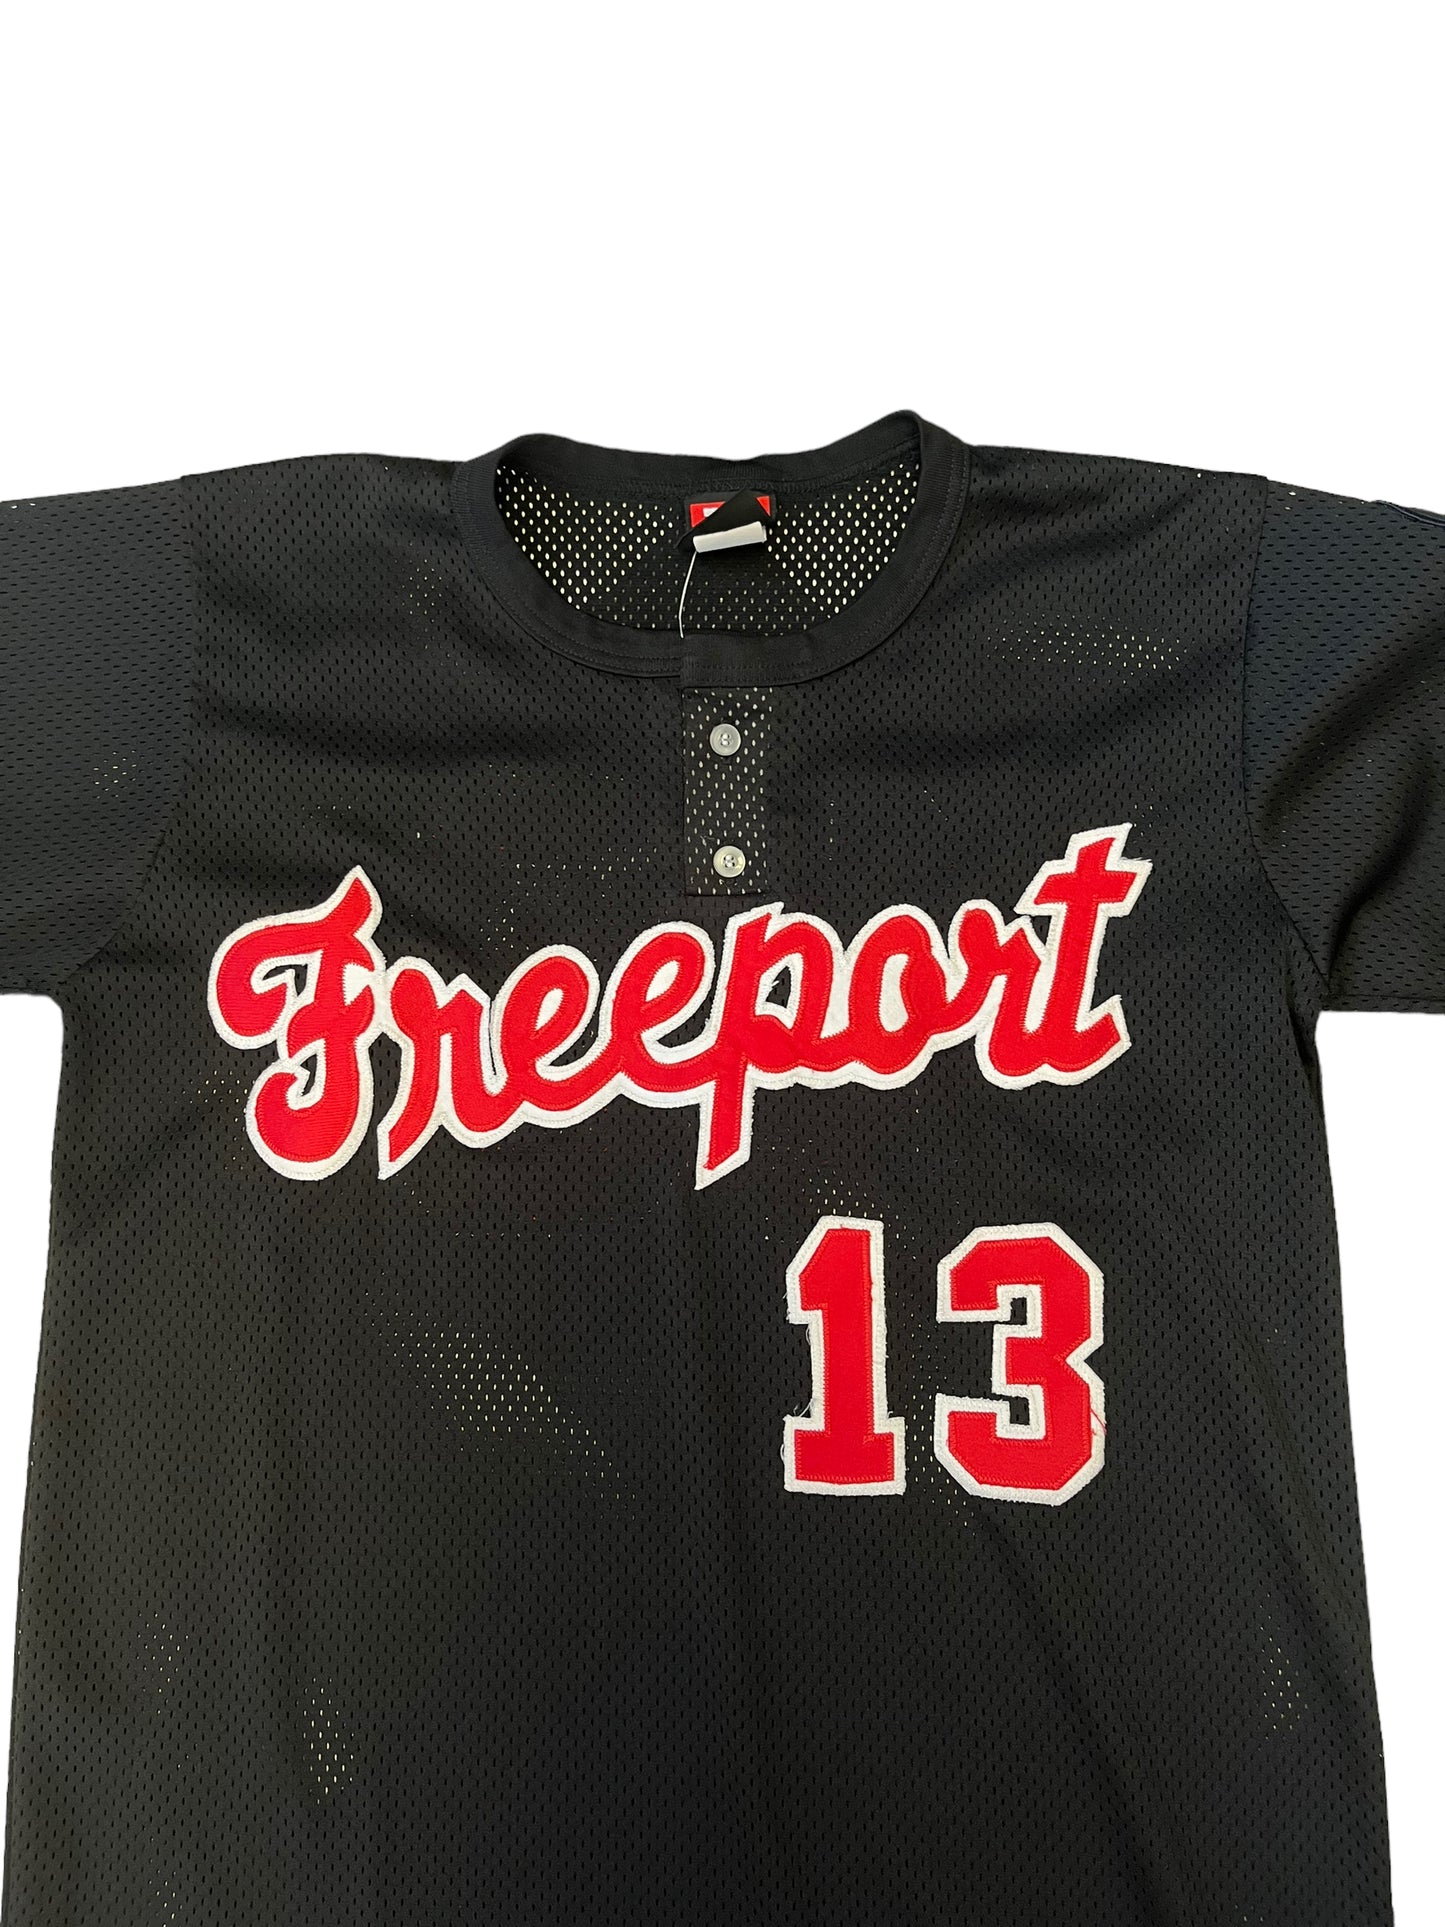 (L) Vintage Freeport Baseball Jersey